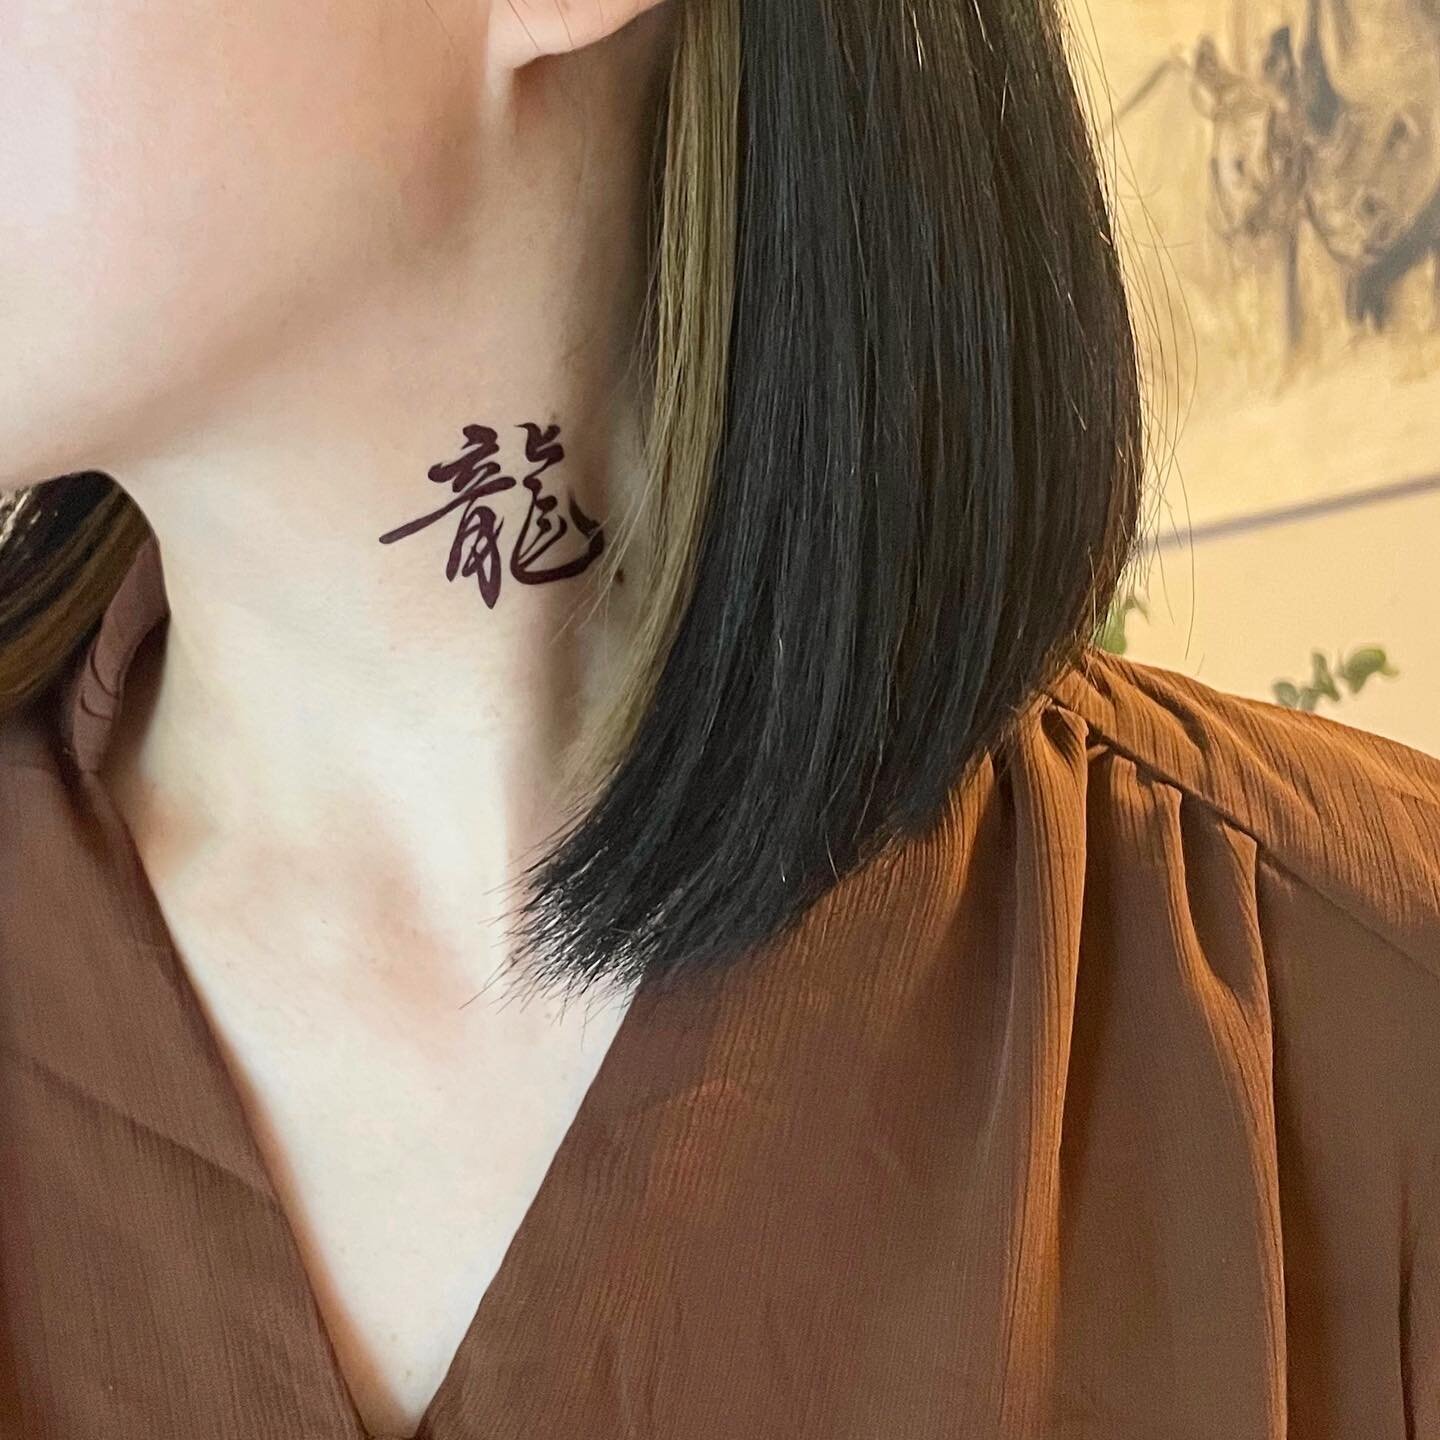 #tattoosticker #japaneseart #japan #wearableart #timelessdesign #caligraphy #shodo #kanji #kanjitattoo #タトゥー #タトゥーシール #漢字 #漢字タトゥー #書道 #着るアート #日本文化 #日本好き #ロードアイランド #タイムレスデザイン #時間の足りないデザイン事務所